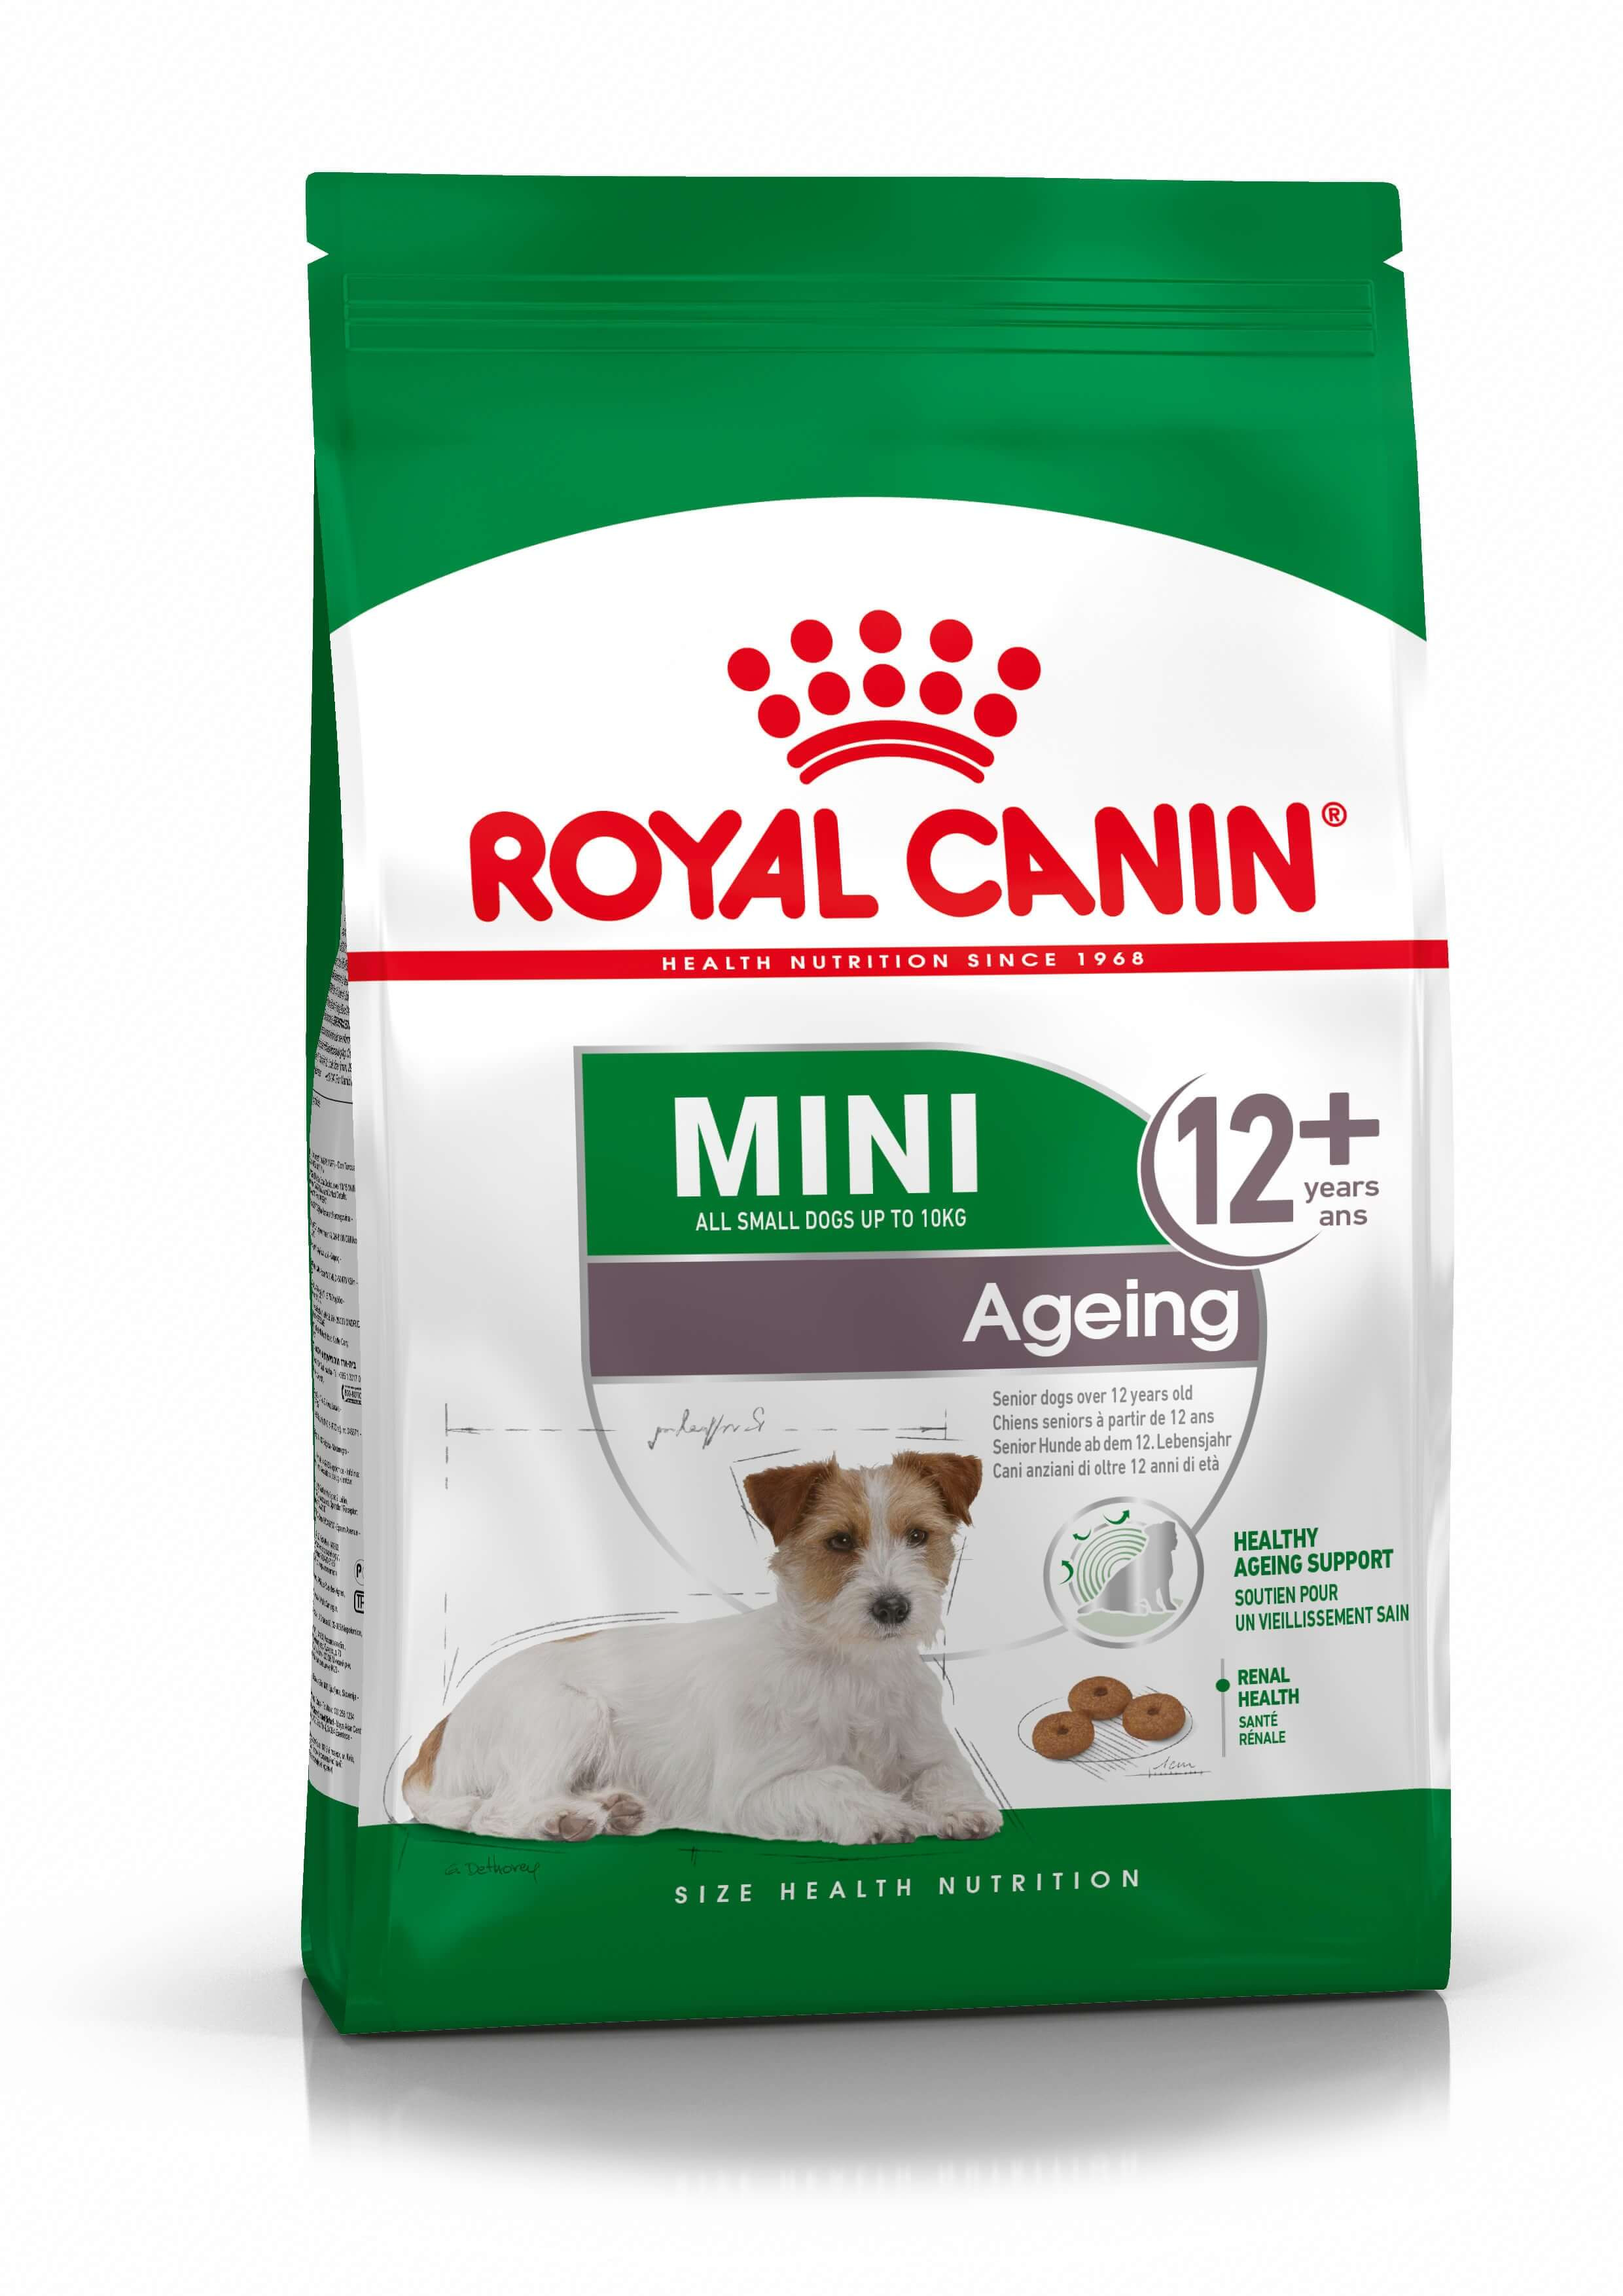 Royal Canin Mini Ageing 12+ hundfoder